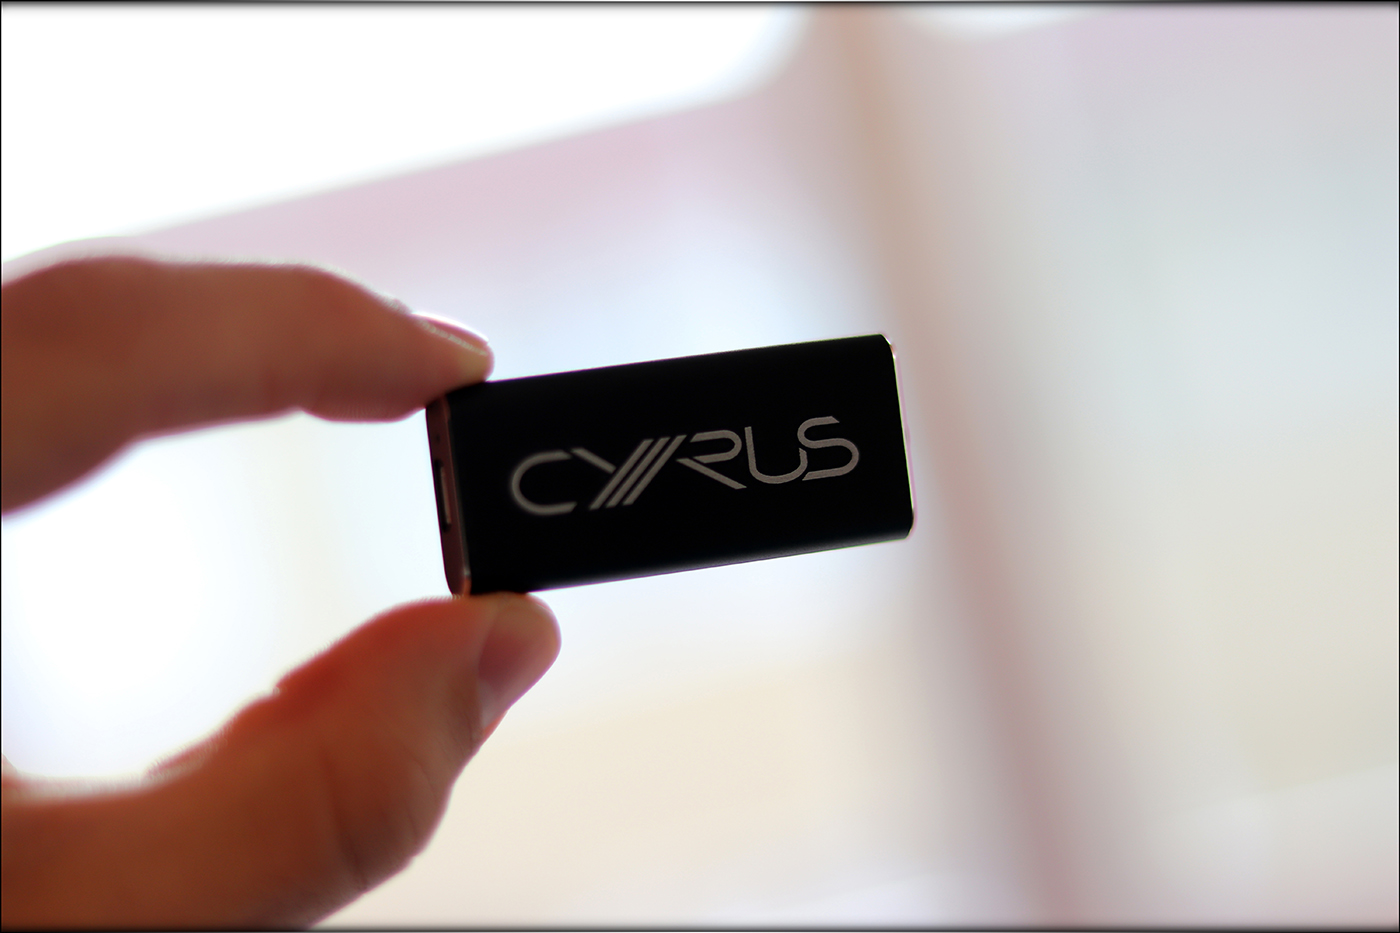 Cyrus-Sound-Key-Soundkey-DAC-AMP-Portable-Smartphone-Review-Audiophile-Heaven-14.jpg